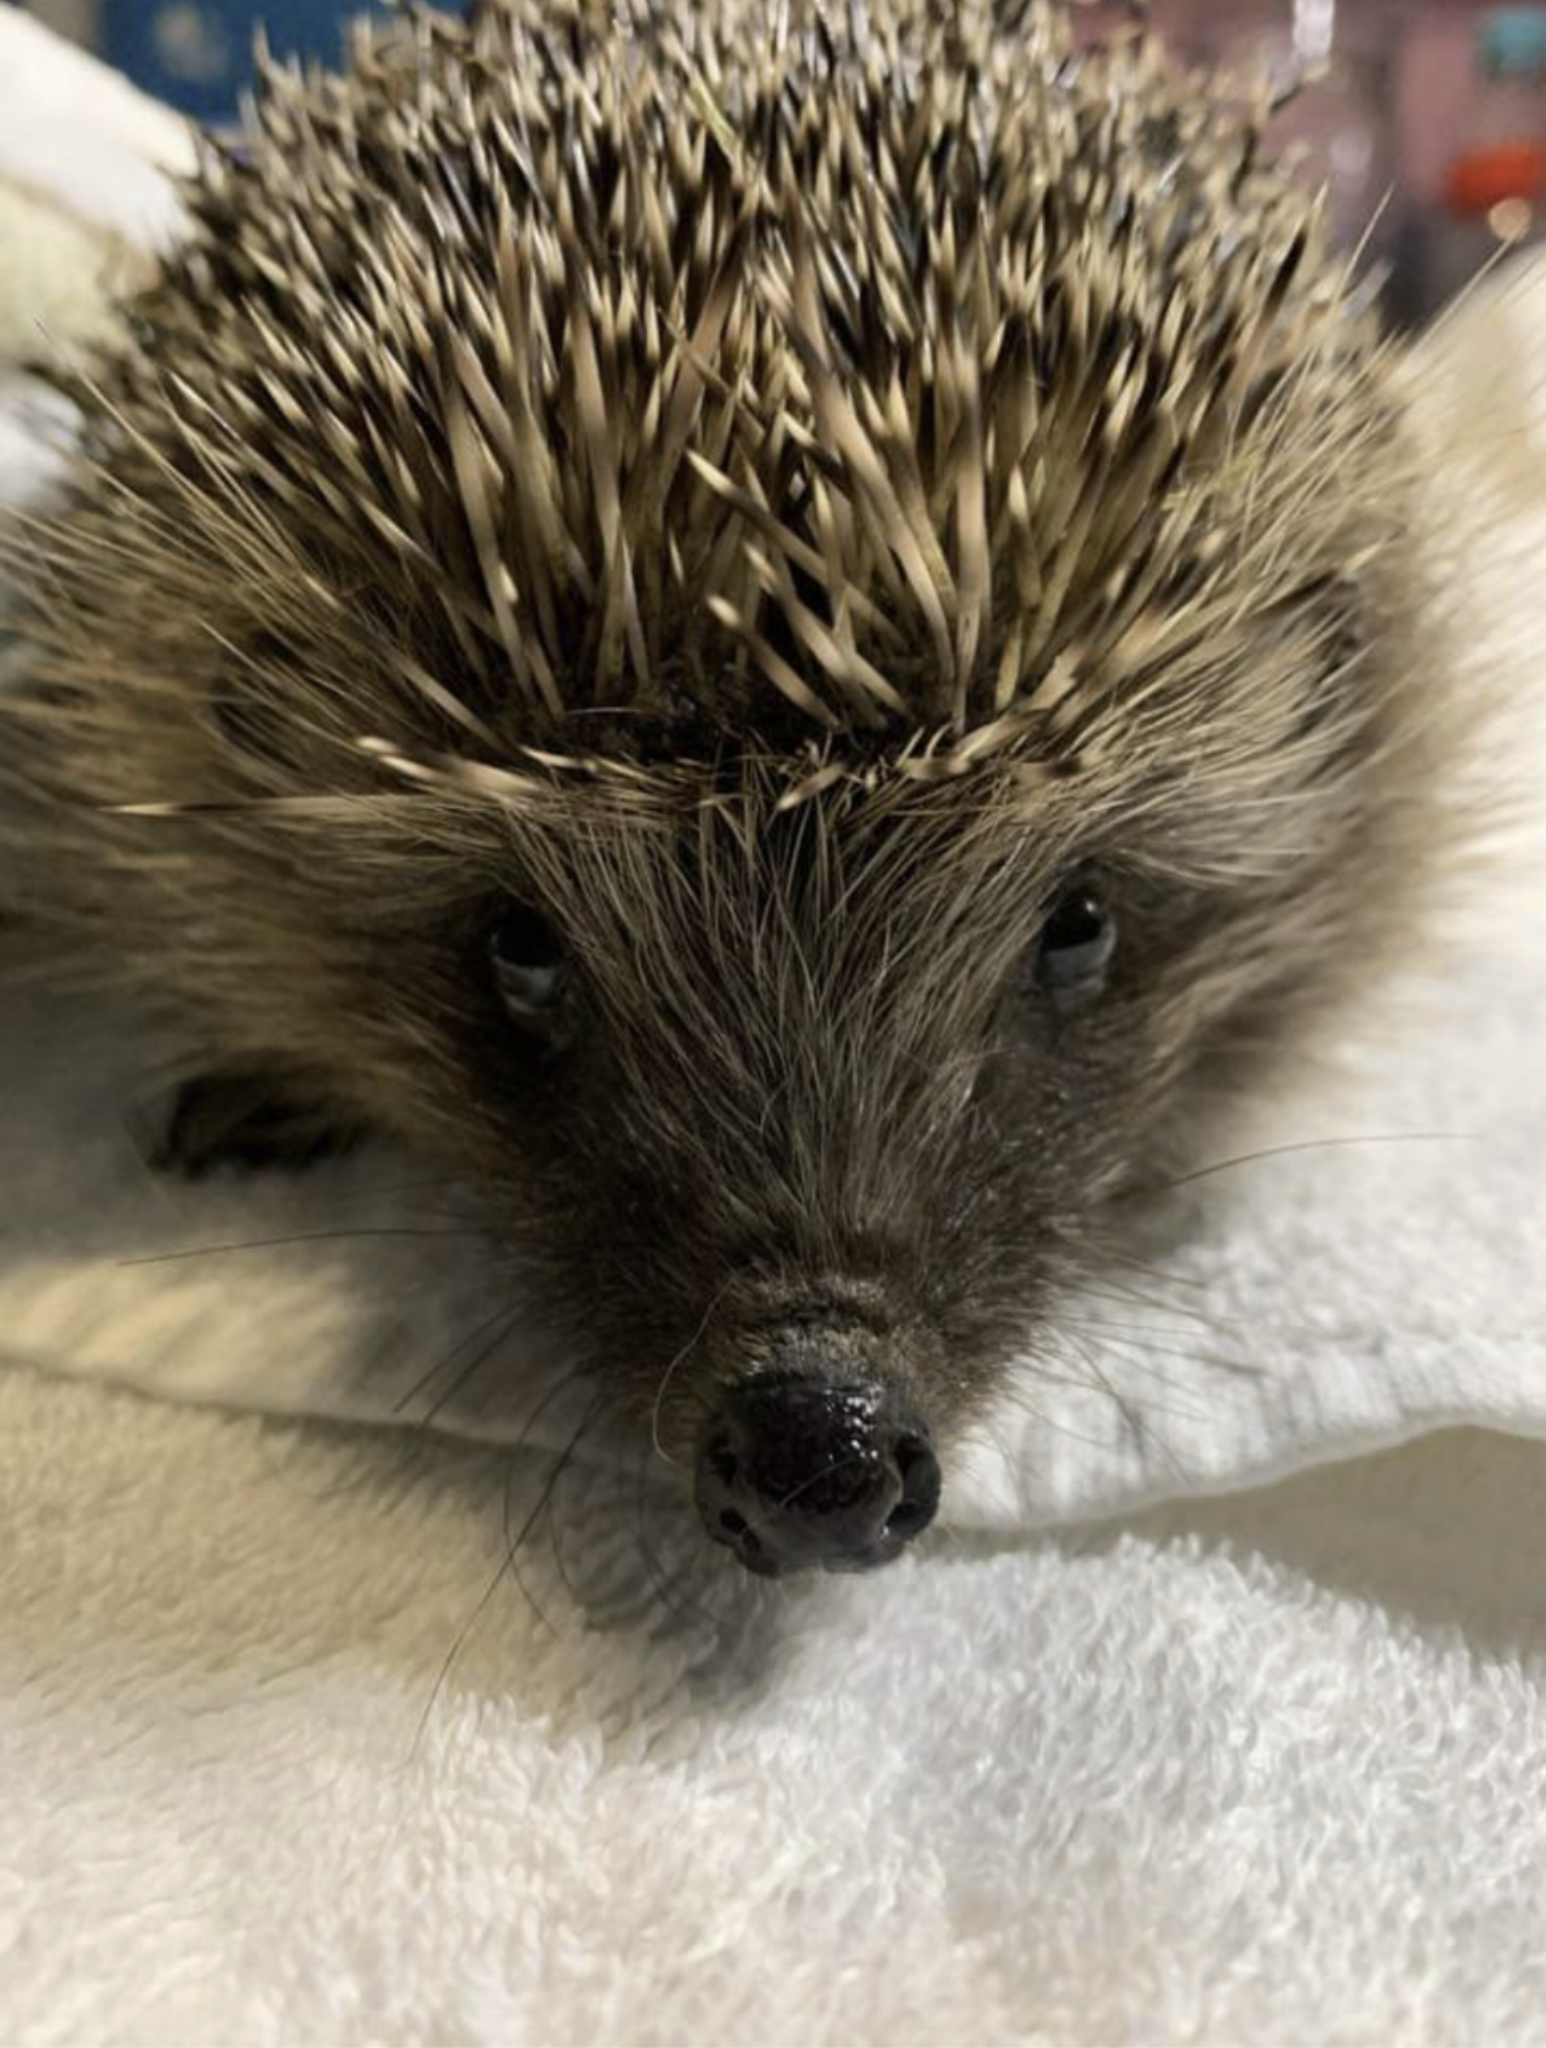 Save Our Hedgehogs! Wildlife Rescues Warn of Danger to Hedgehogs from Strimmers as Peak Gardening Season Arrives